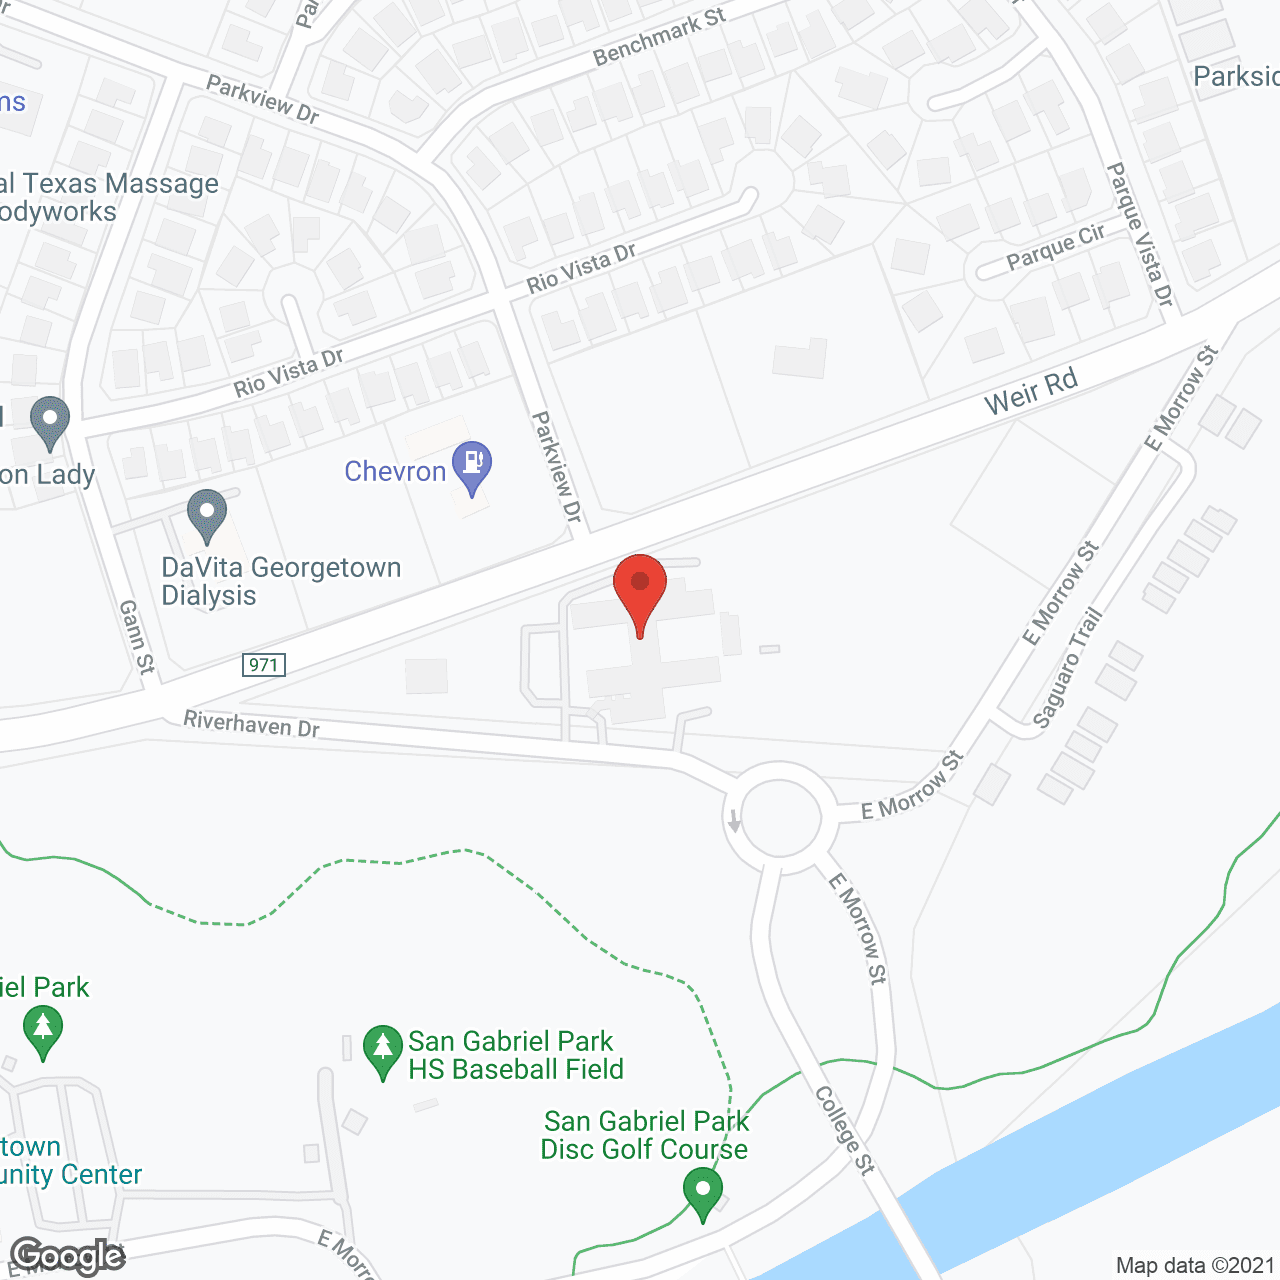 River Haven Nursing Home in google map